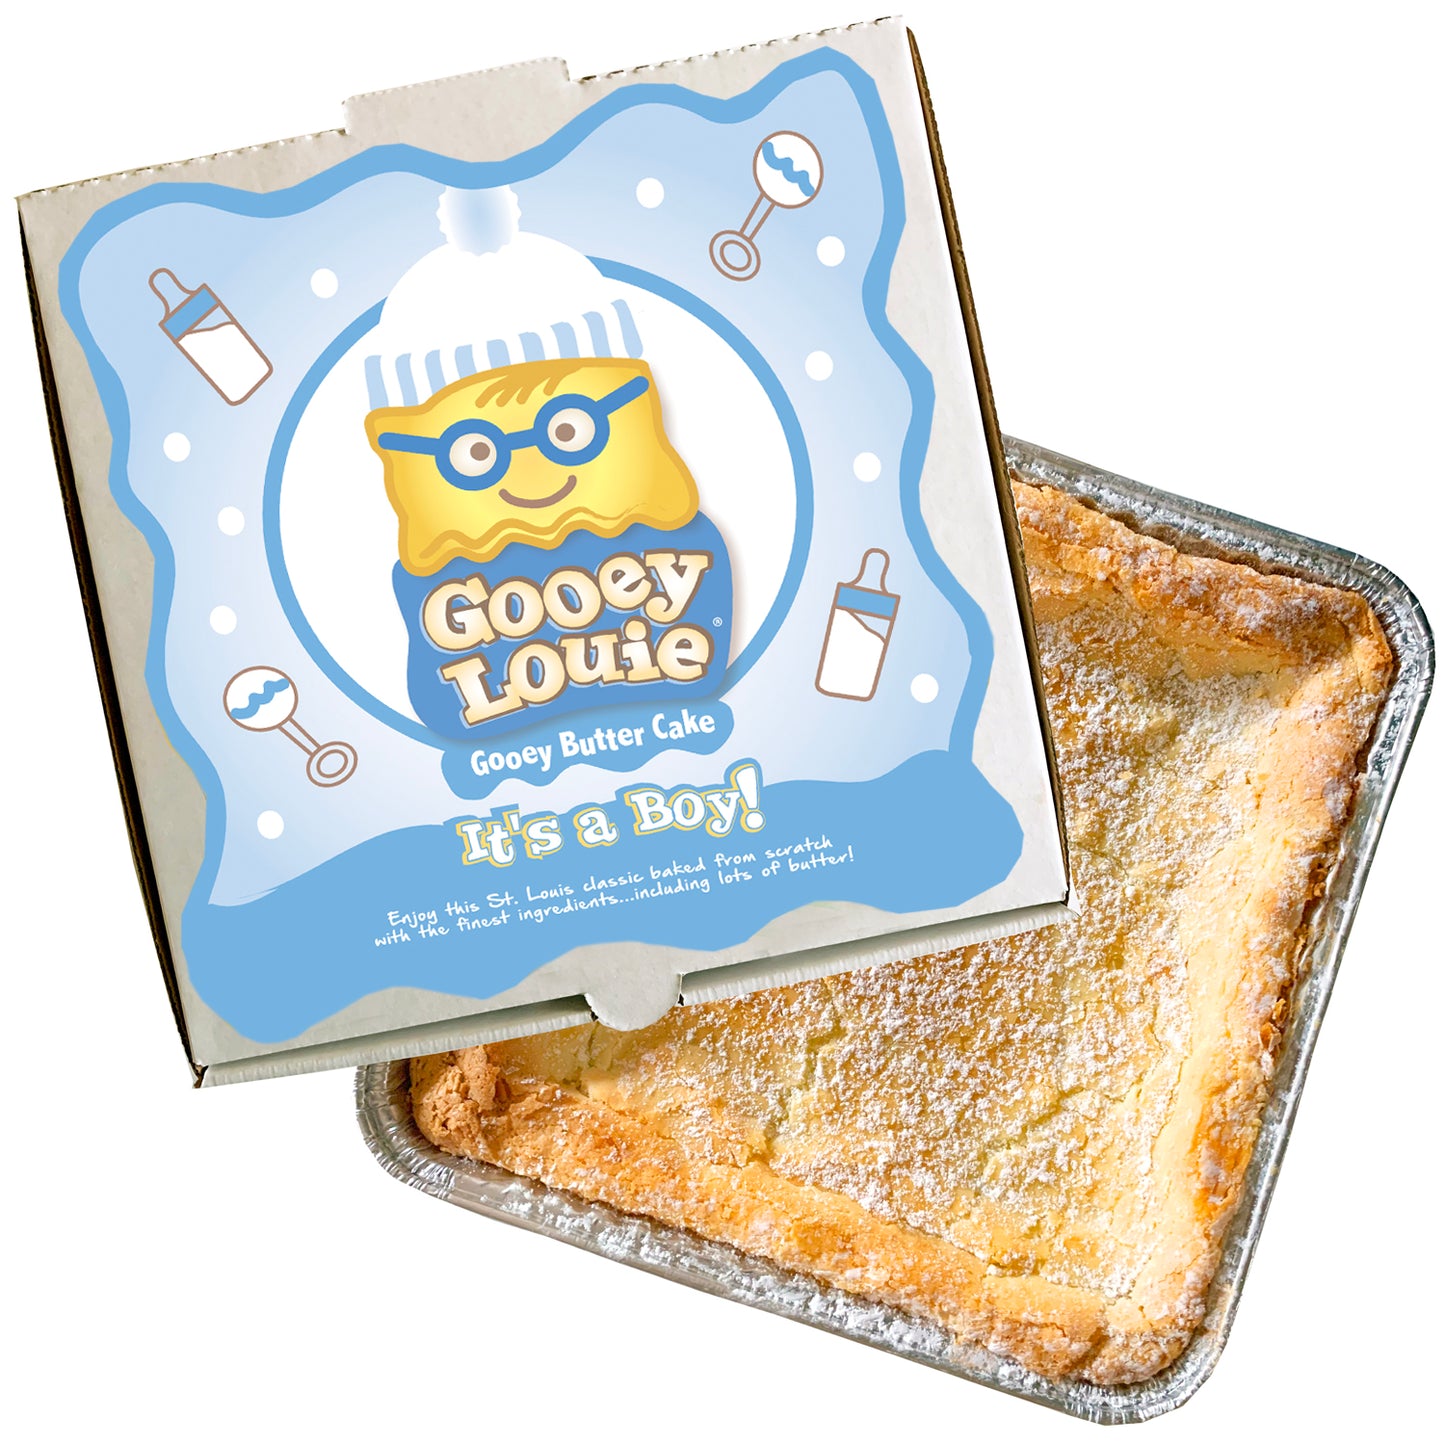 IT'S A BOY! Gooey Louie Gift Box– Gooey Butter Cake LOCAL PICKUP